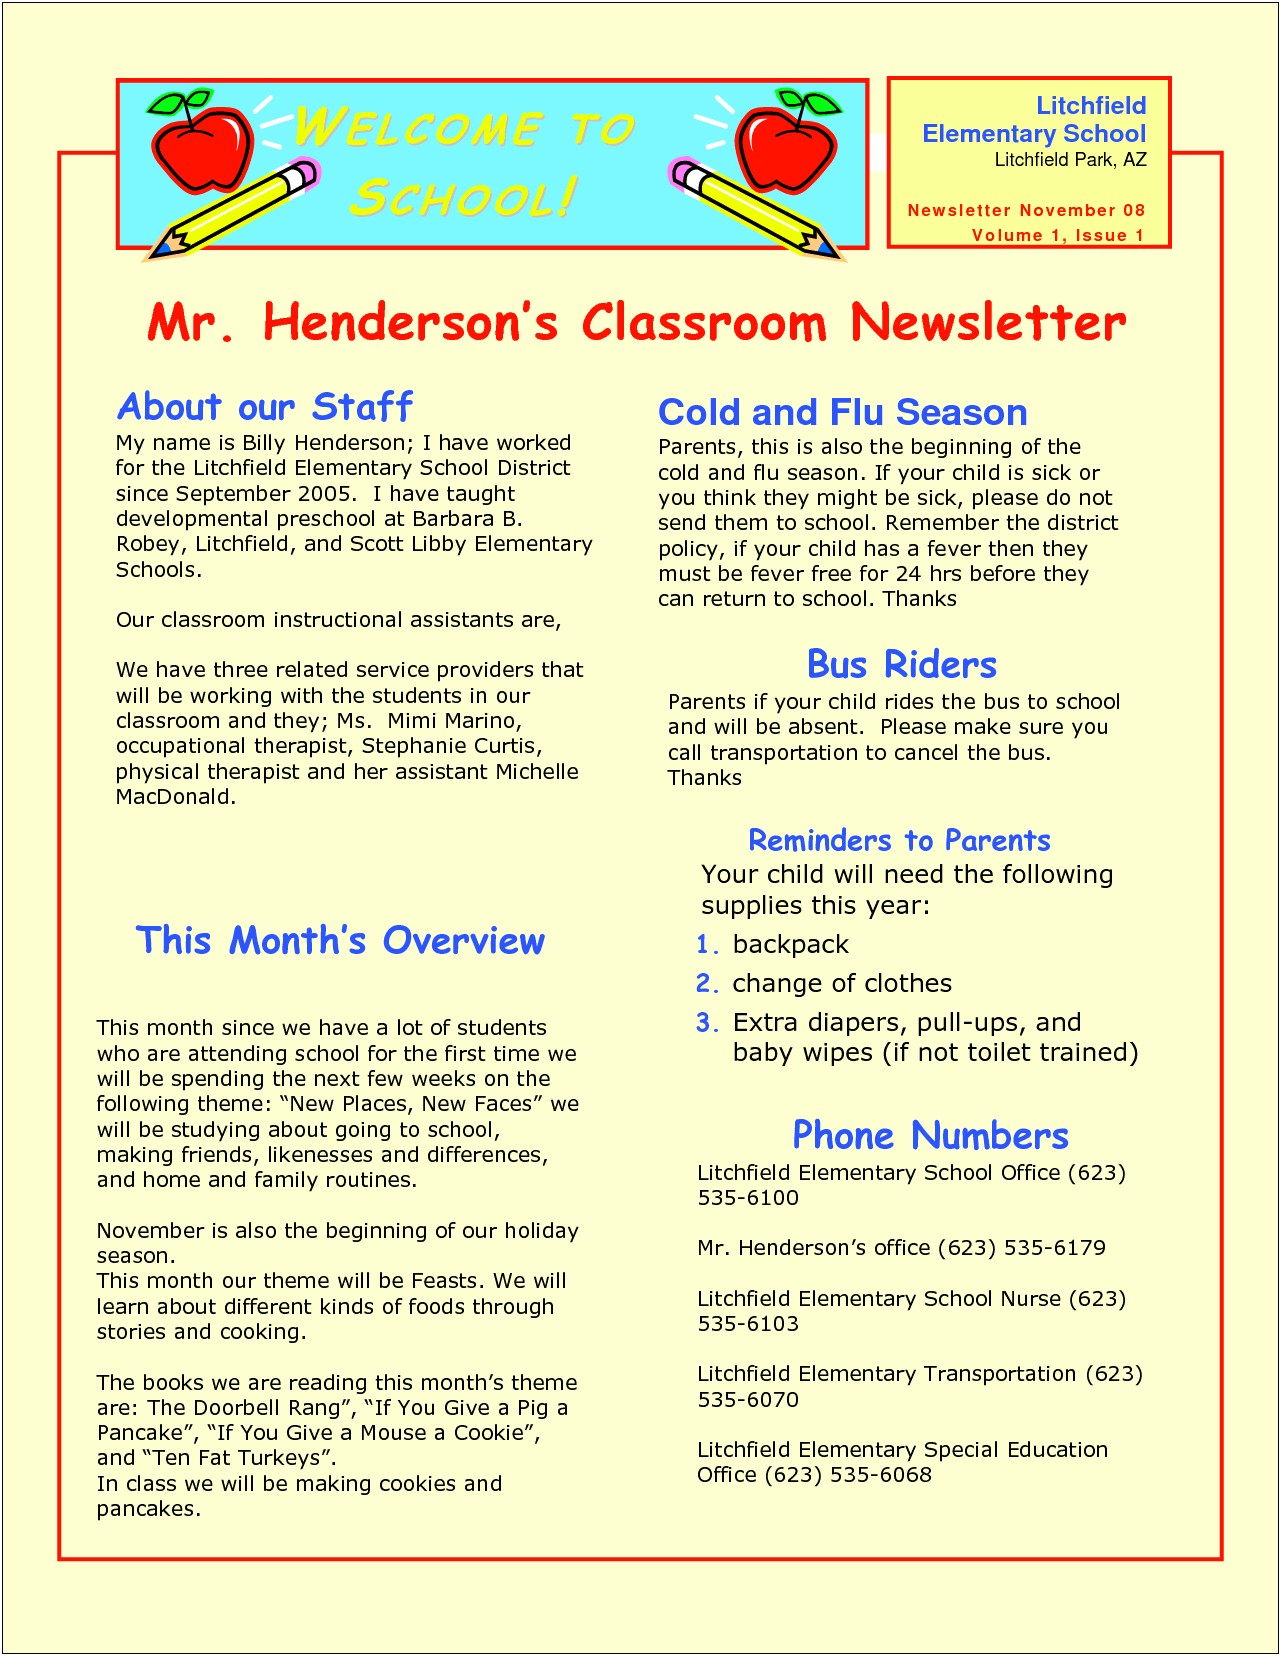 Free Preschool Newsletter Templates For Teachers